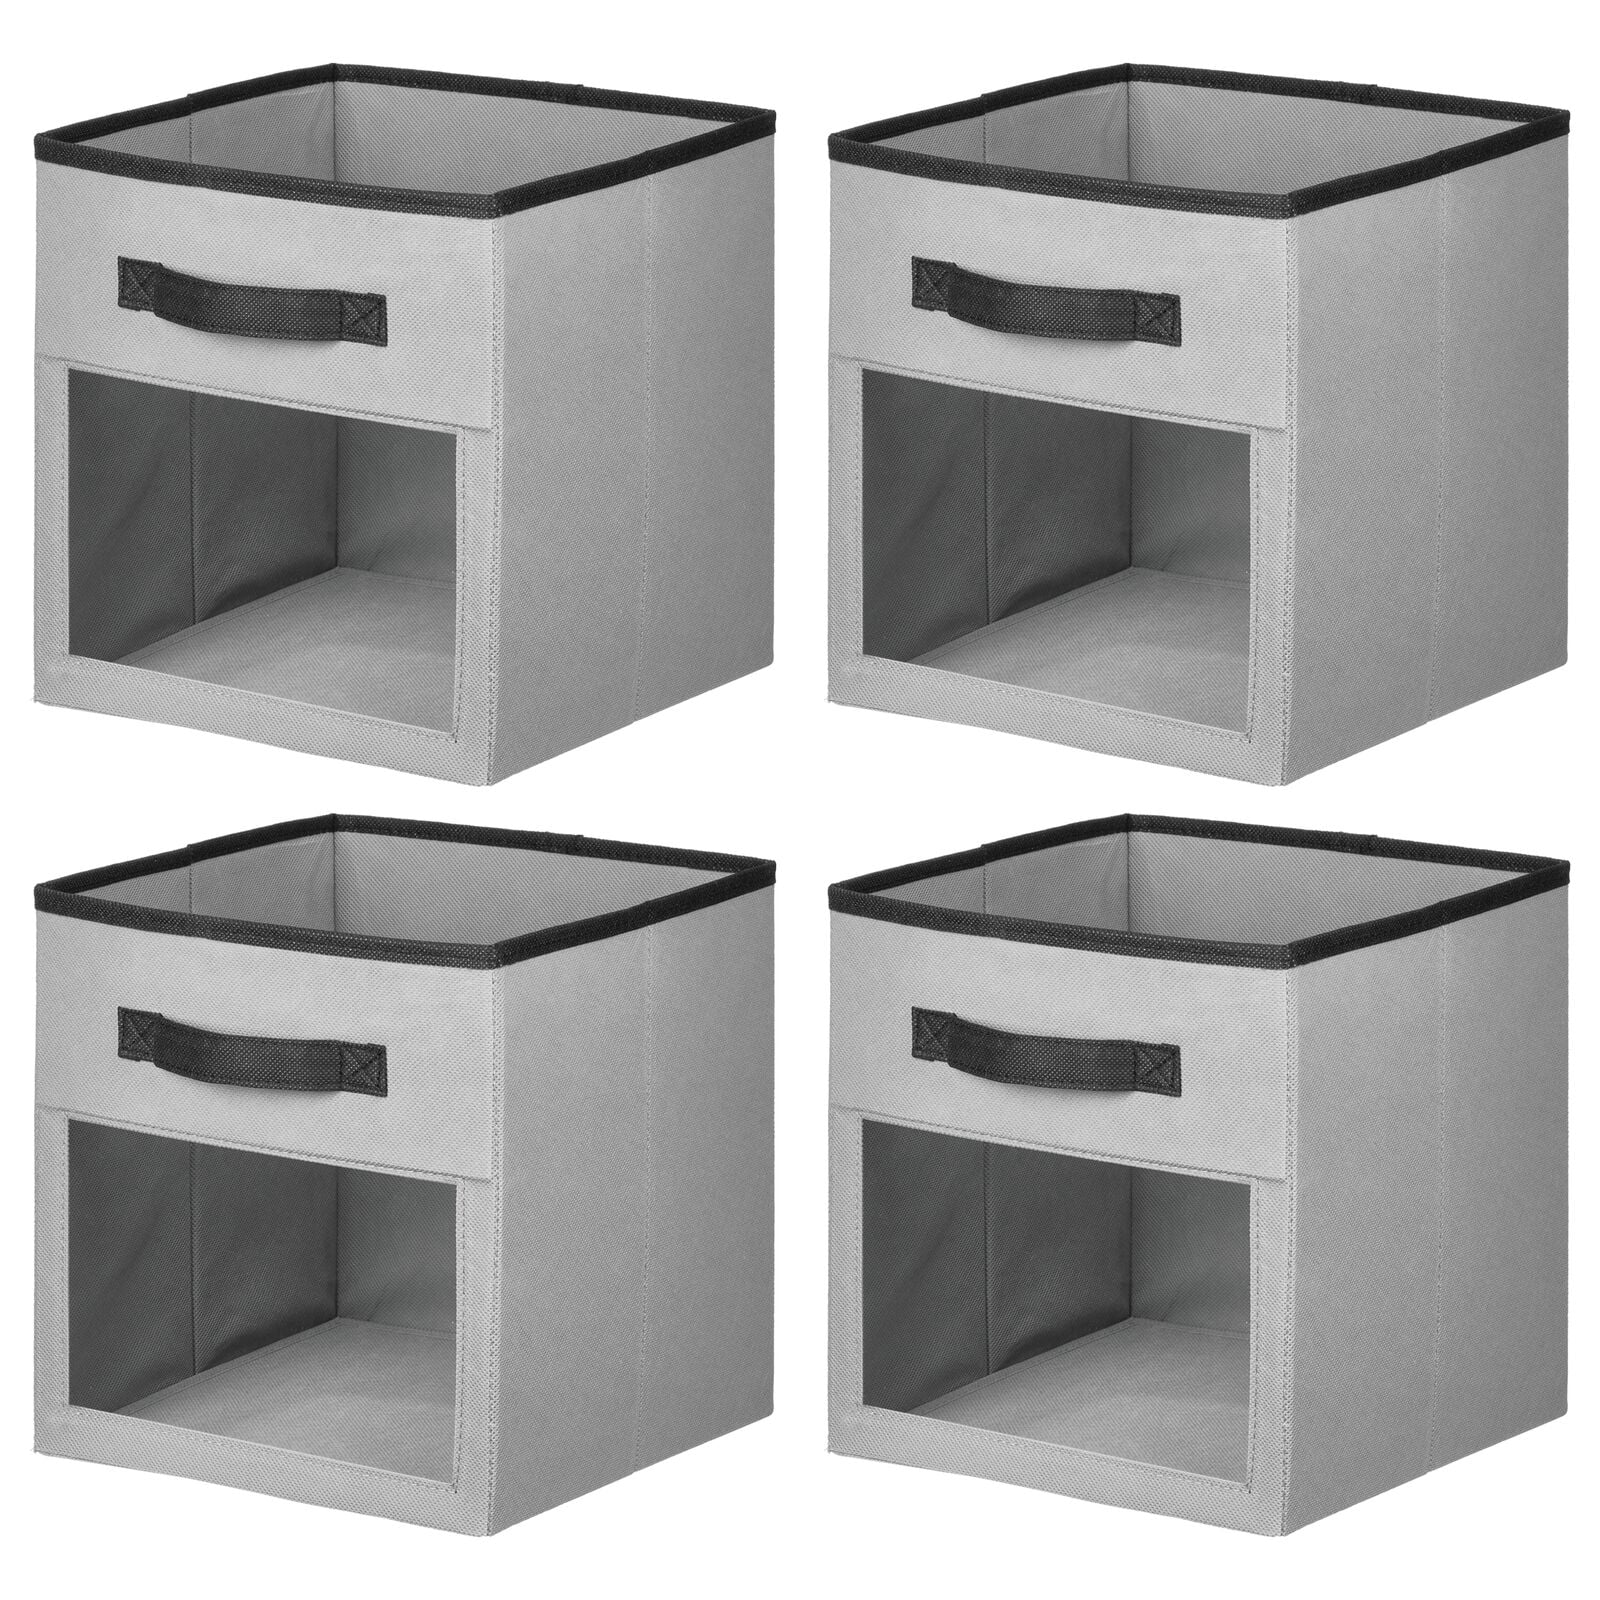 Large mDesign Soft Fabric Kids Storage Organizer Cube Bin Gray 4 Pack 